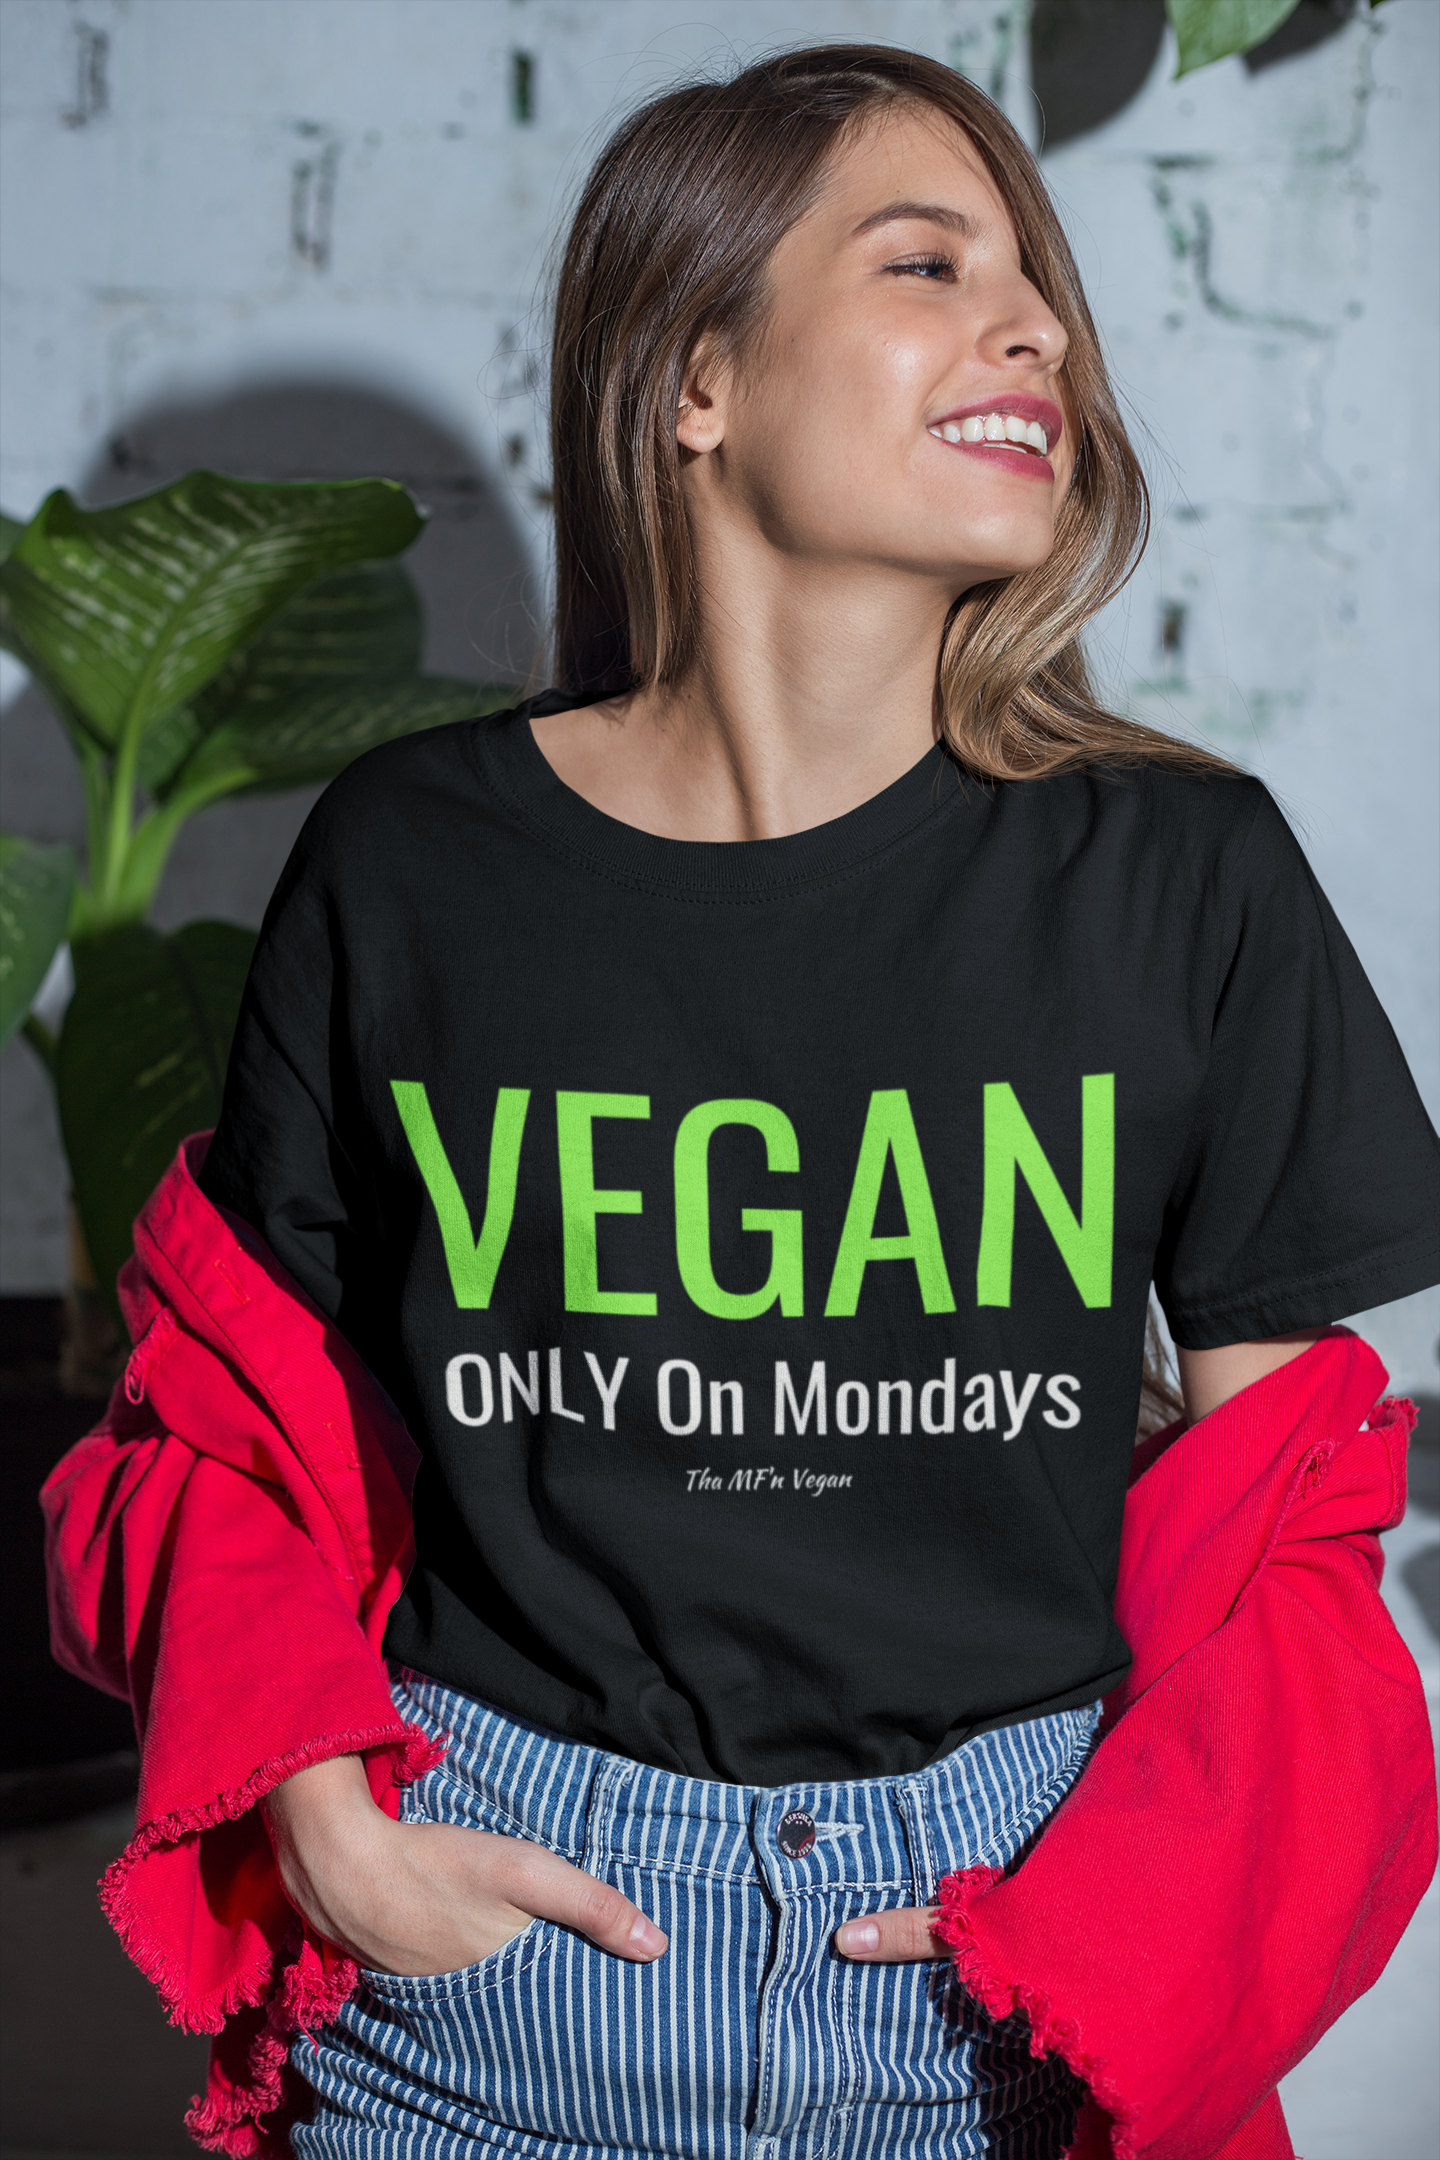 Vegan Only On Mondays- Black Unisex Shirt